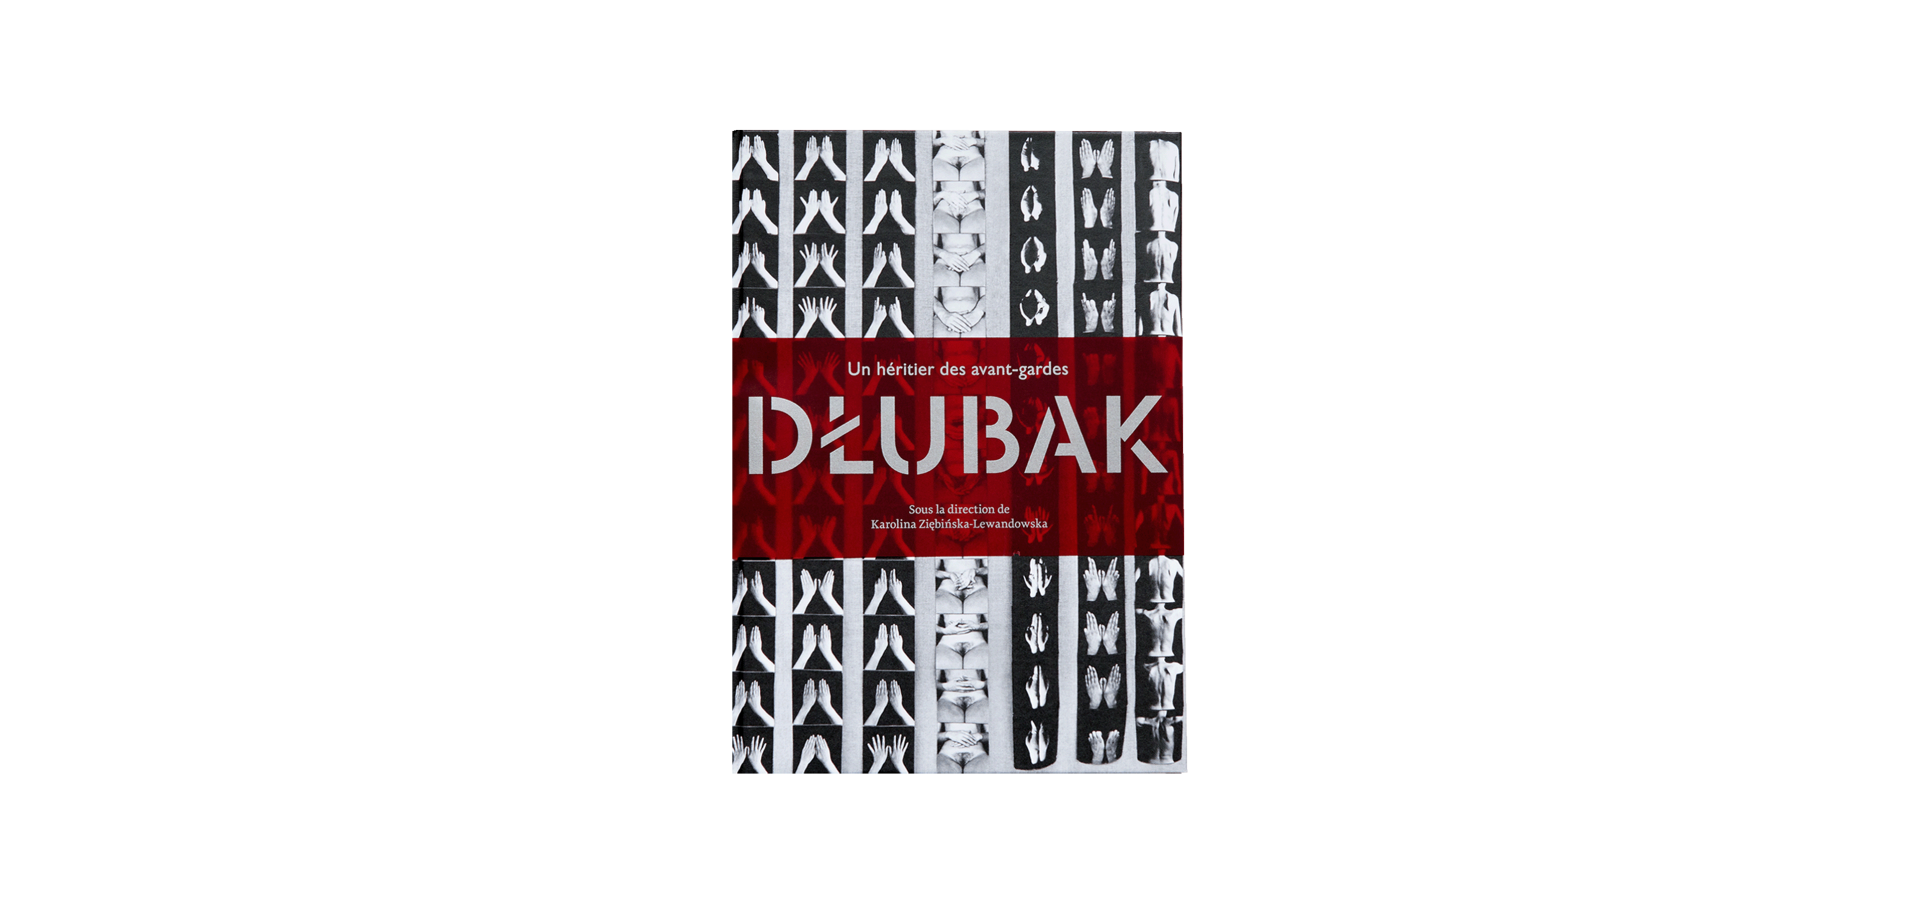 Dlubak, un héritier des avant-gardes